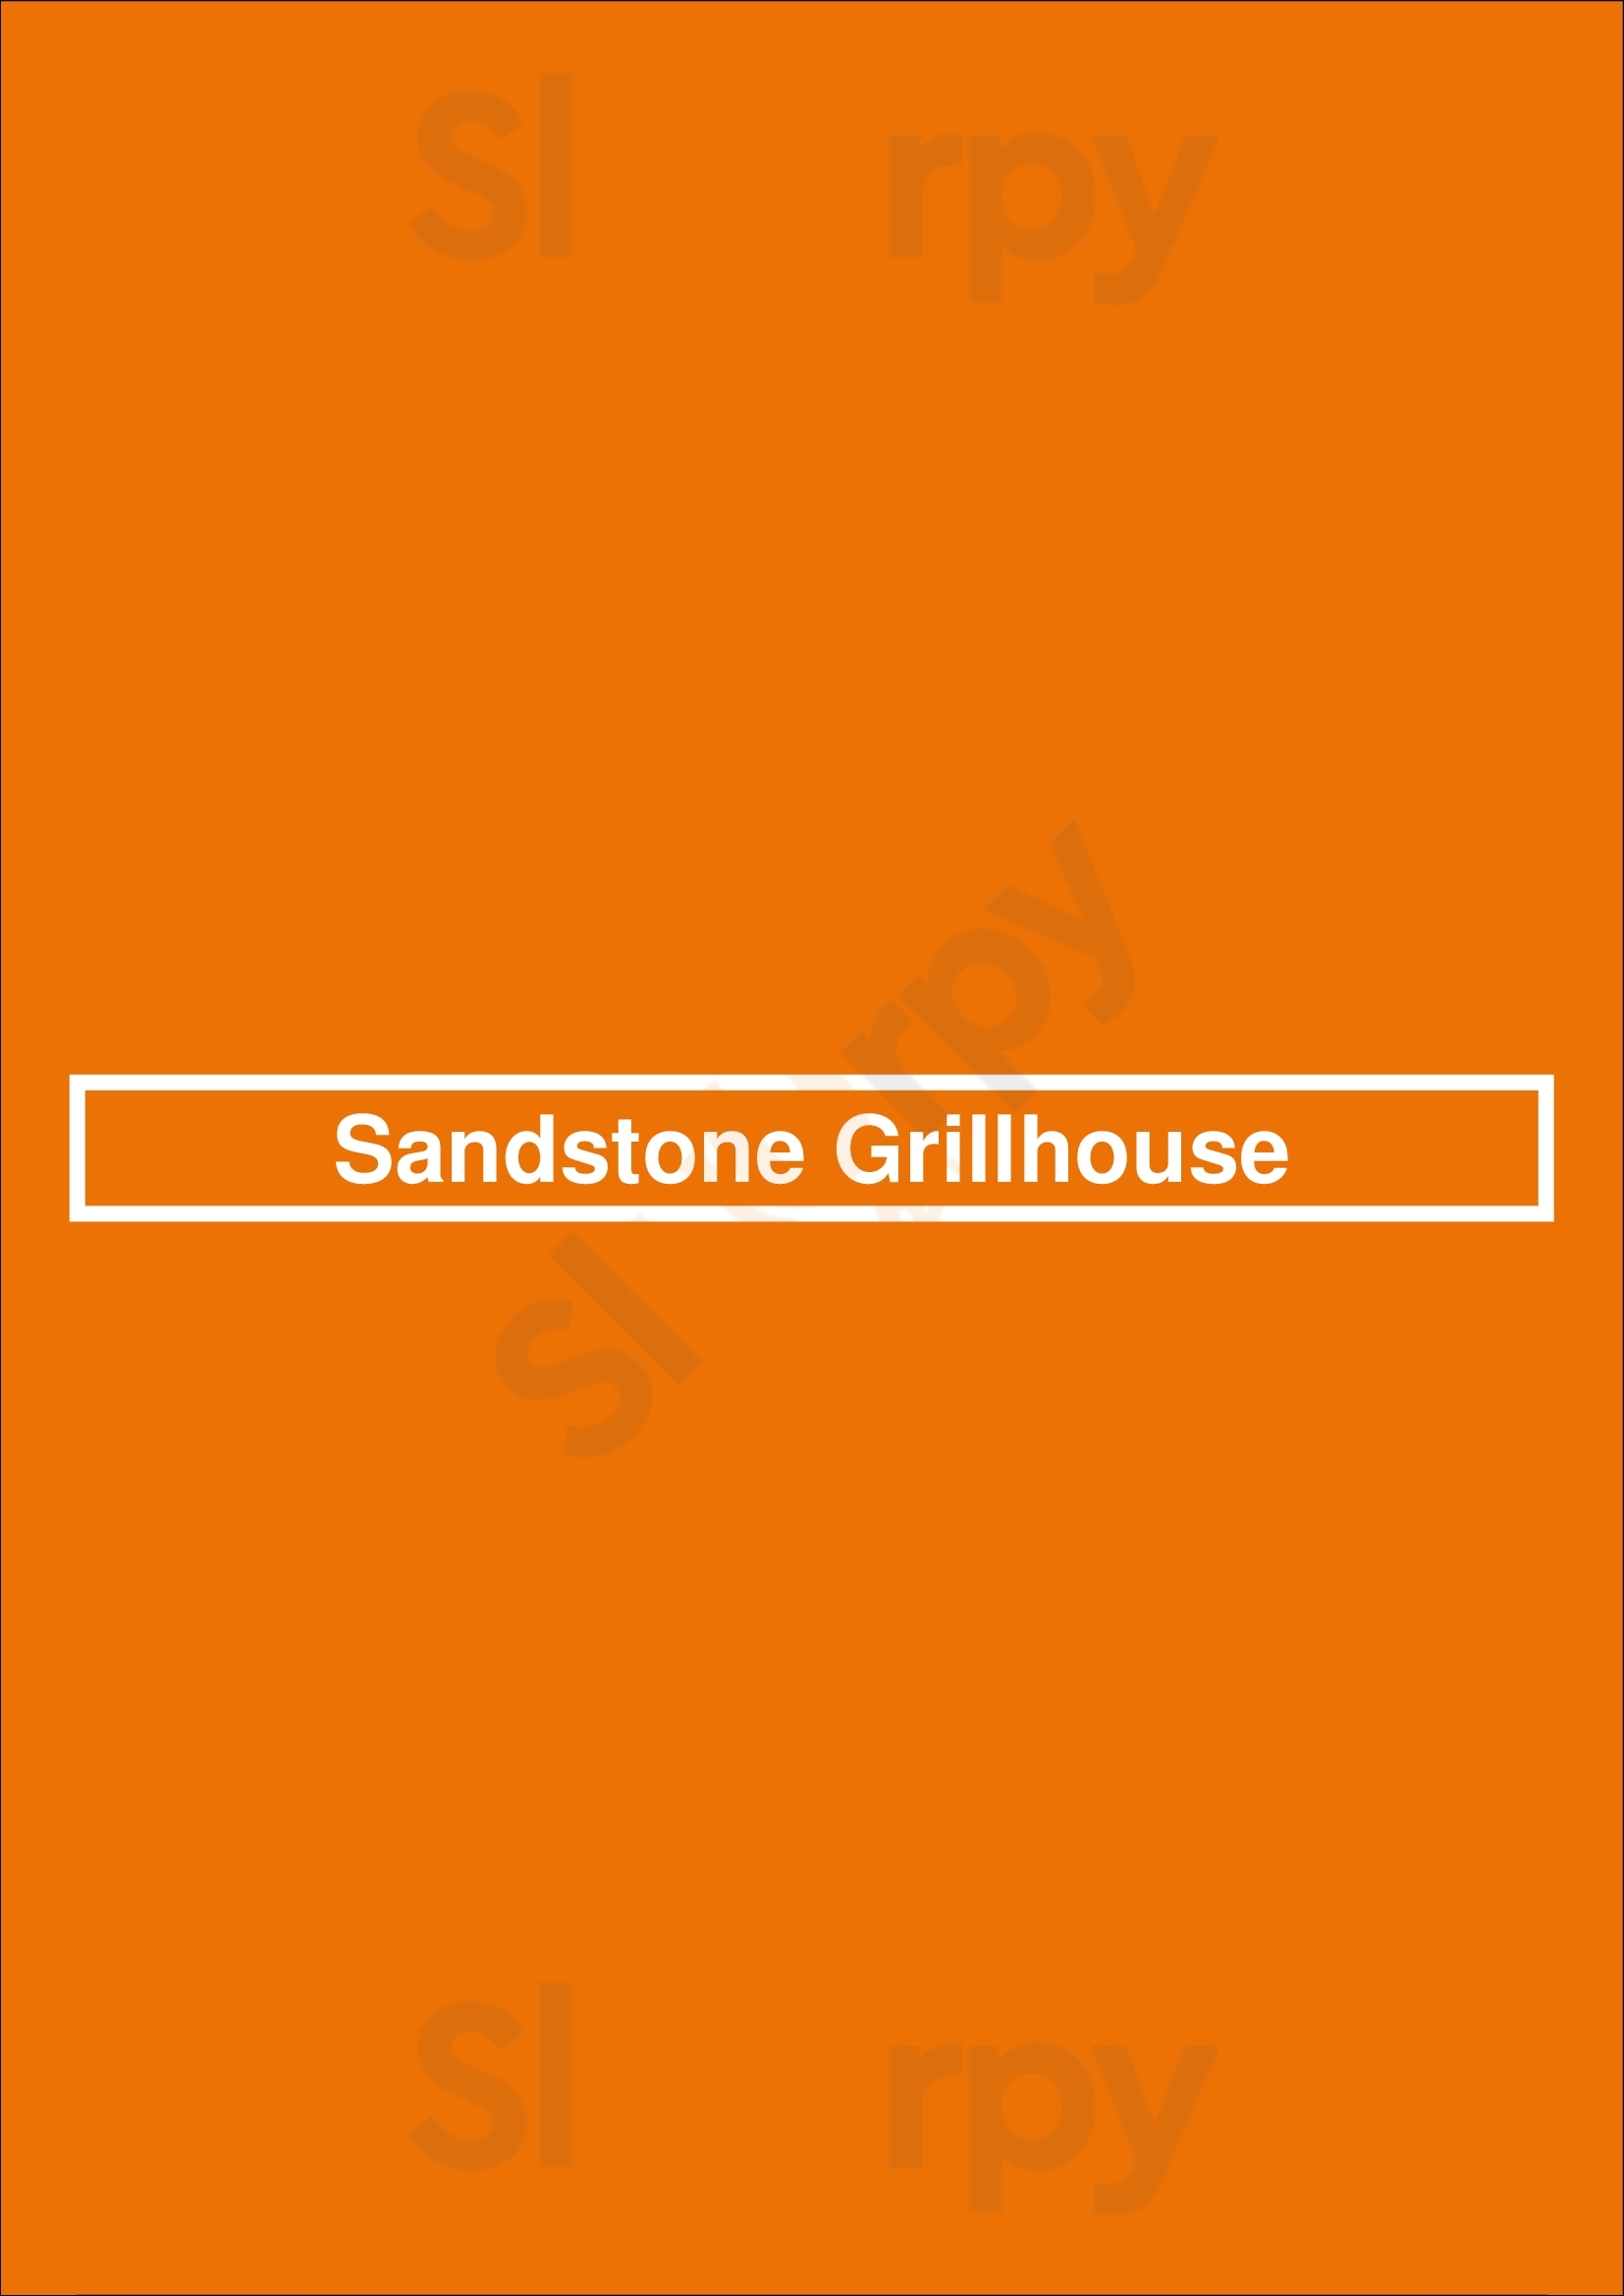 Sandstone Grillhouse Niagara Falls Menu - 1